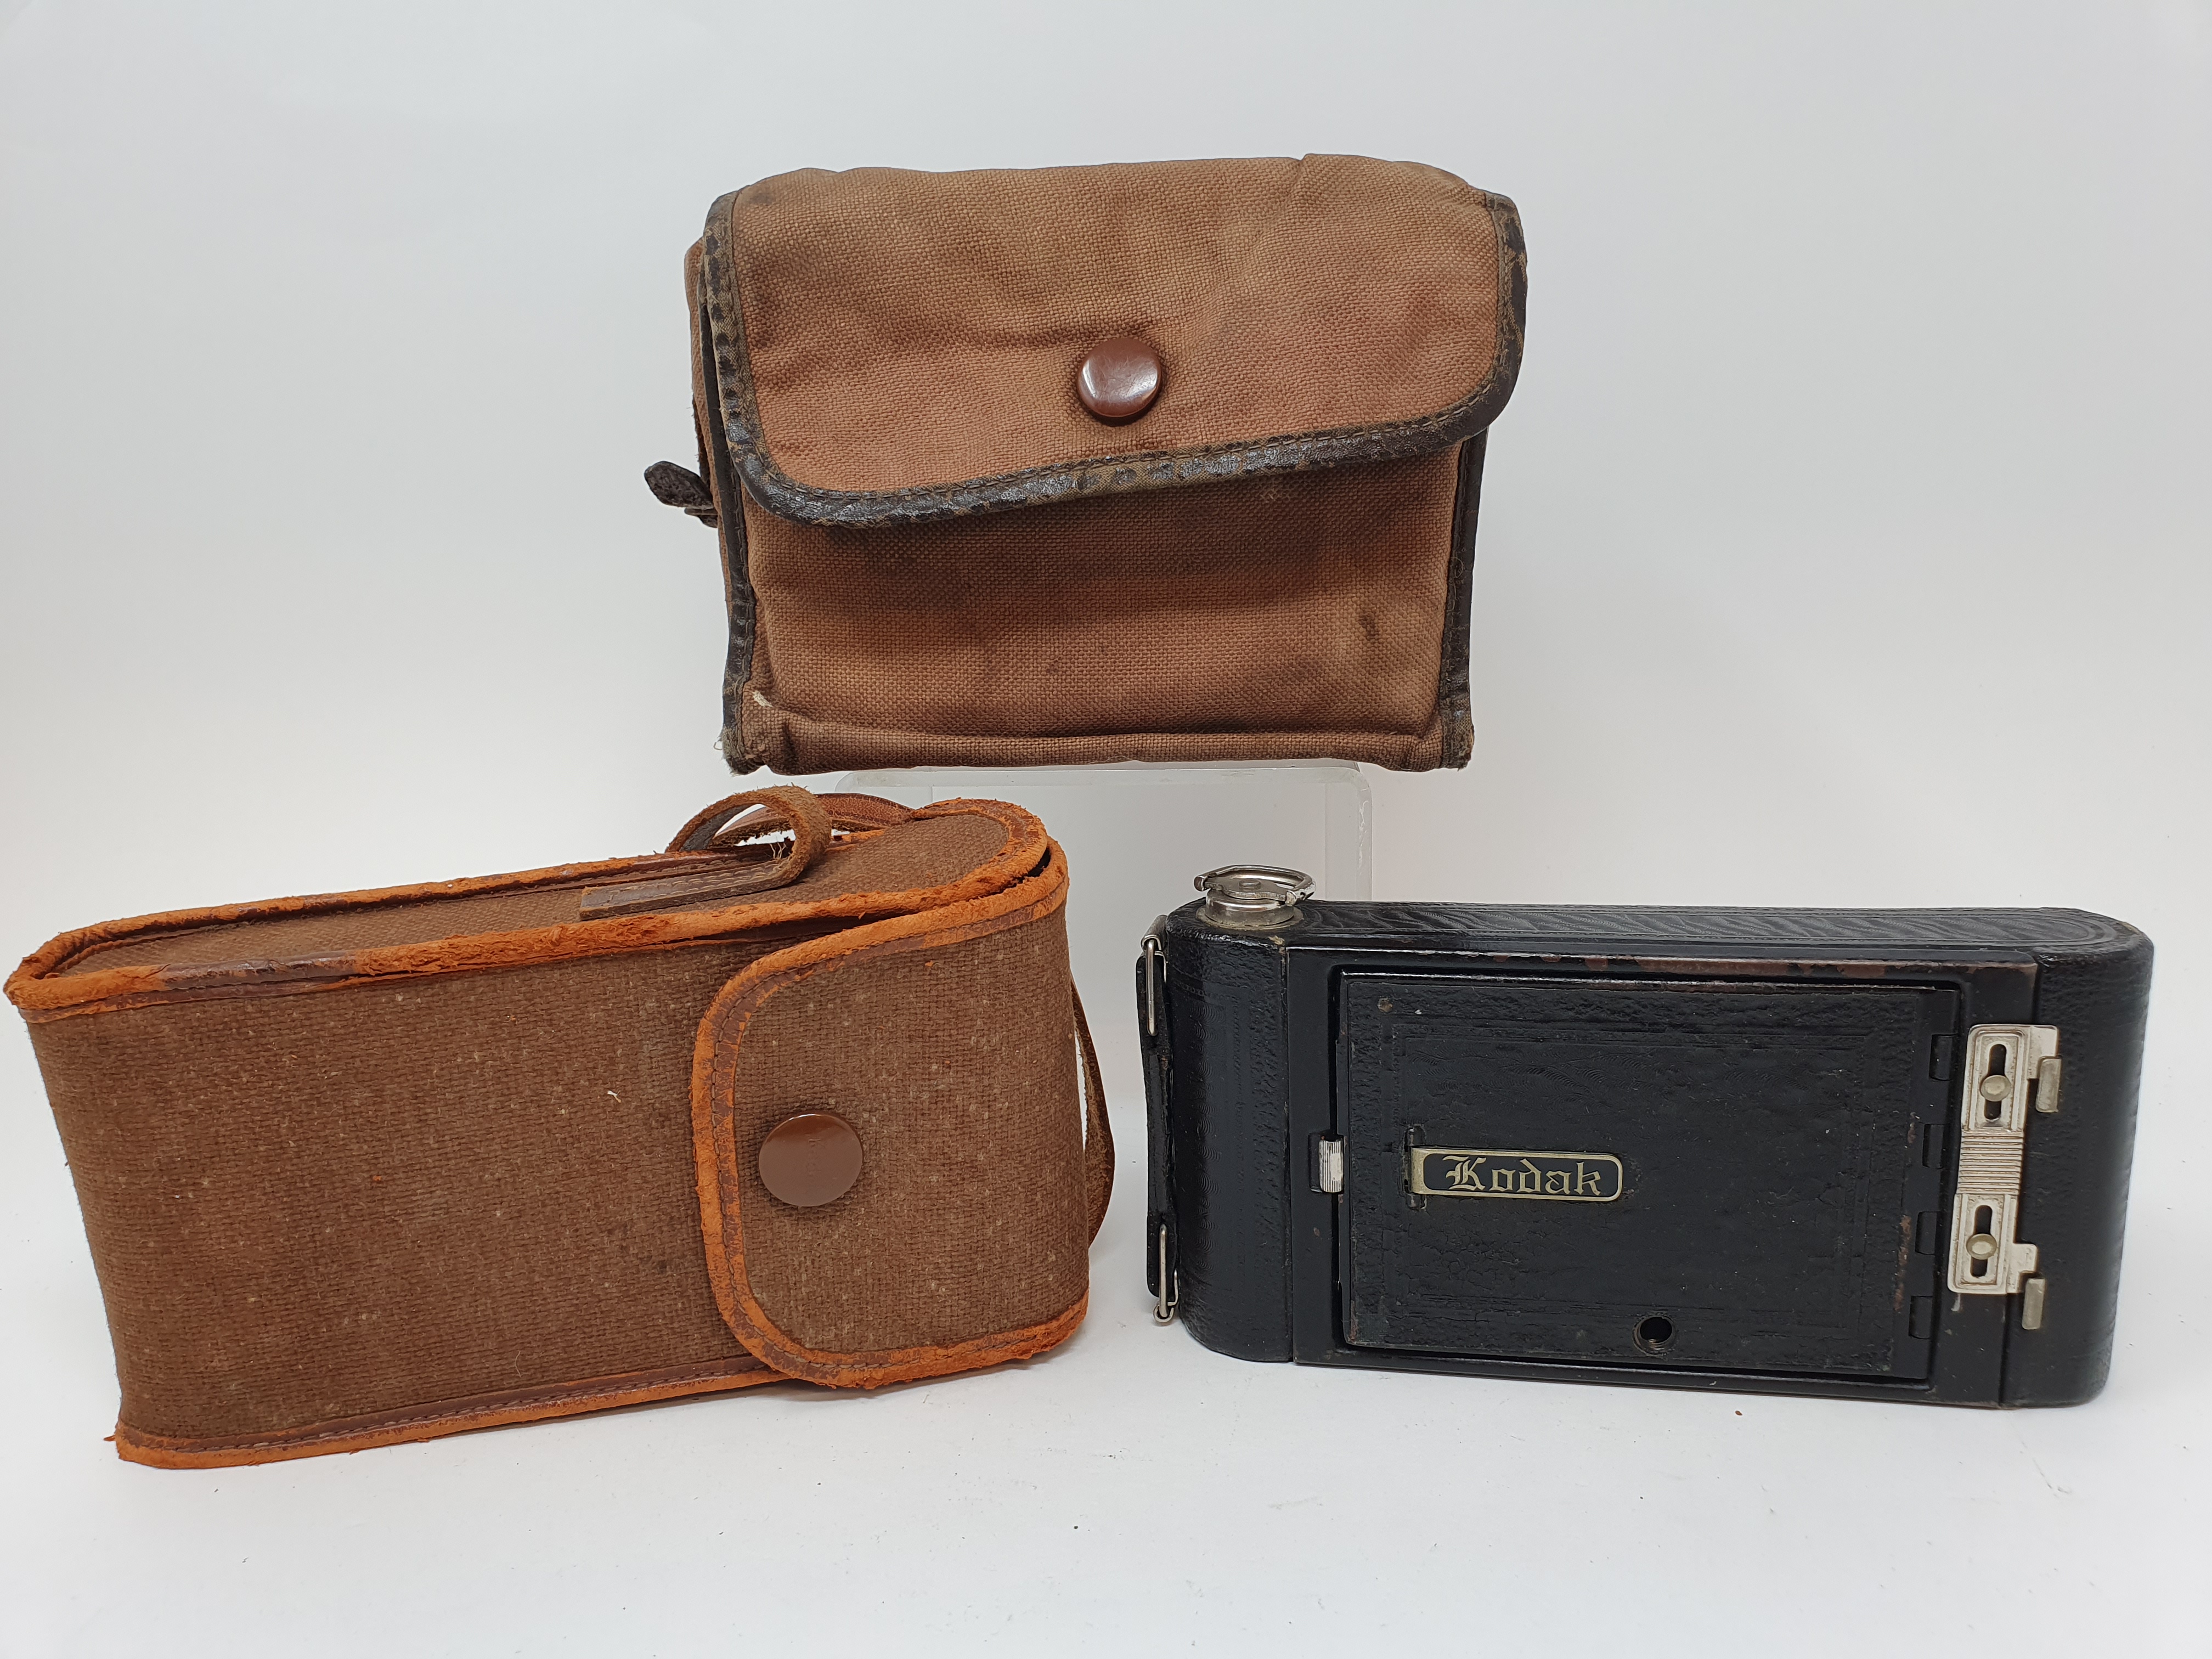 A Kodak Autographic Brownie folding camera, with canvas case, a Kodak No. 1 folding camera, and an - Image 6 of 6